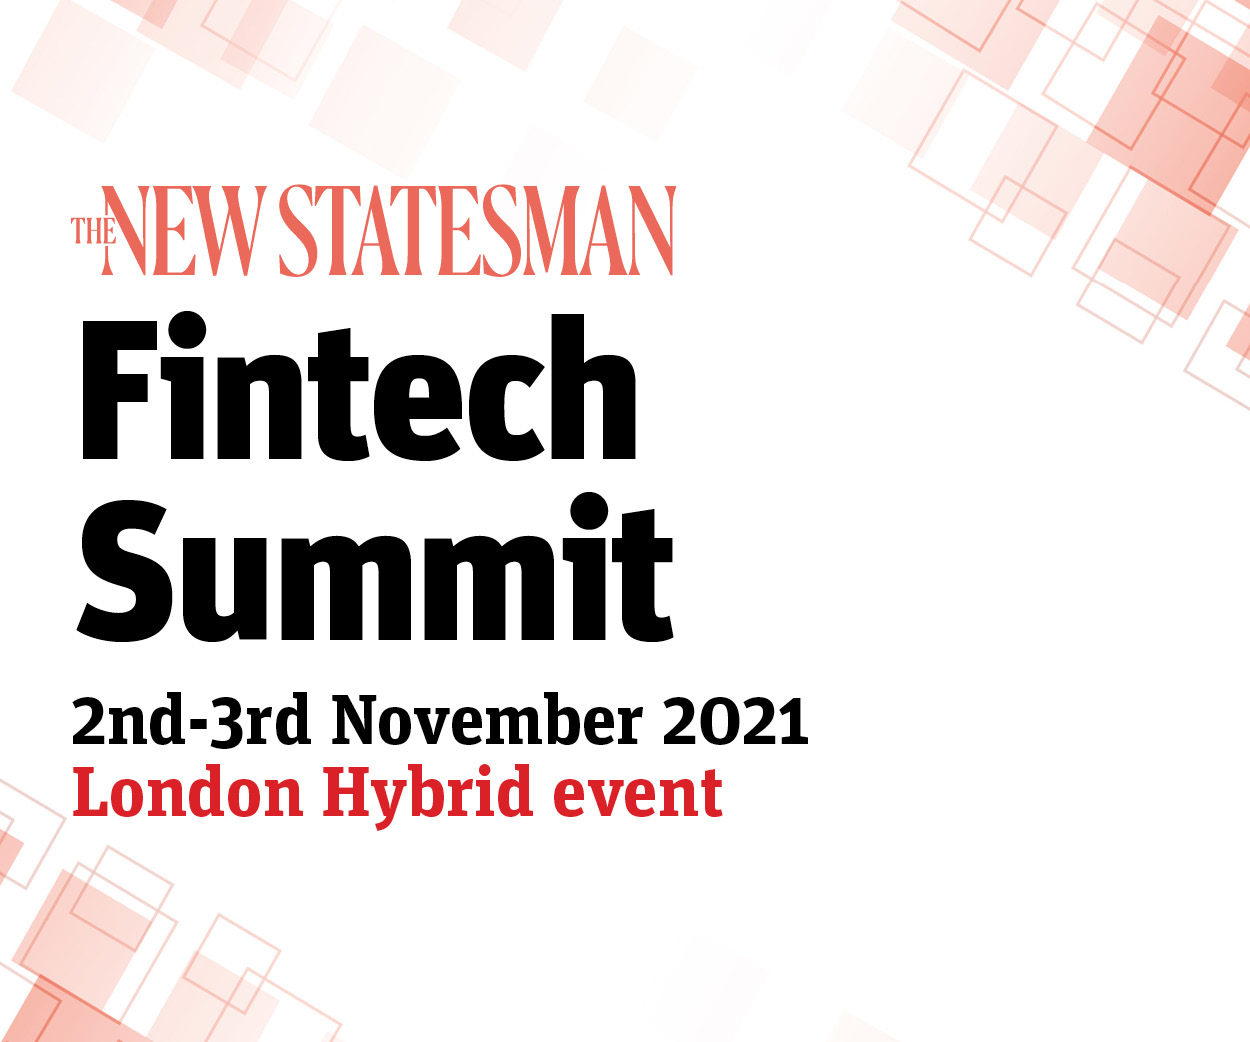 Fintech Summit organized by New Statesman Media Group